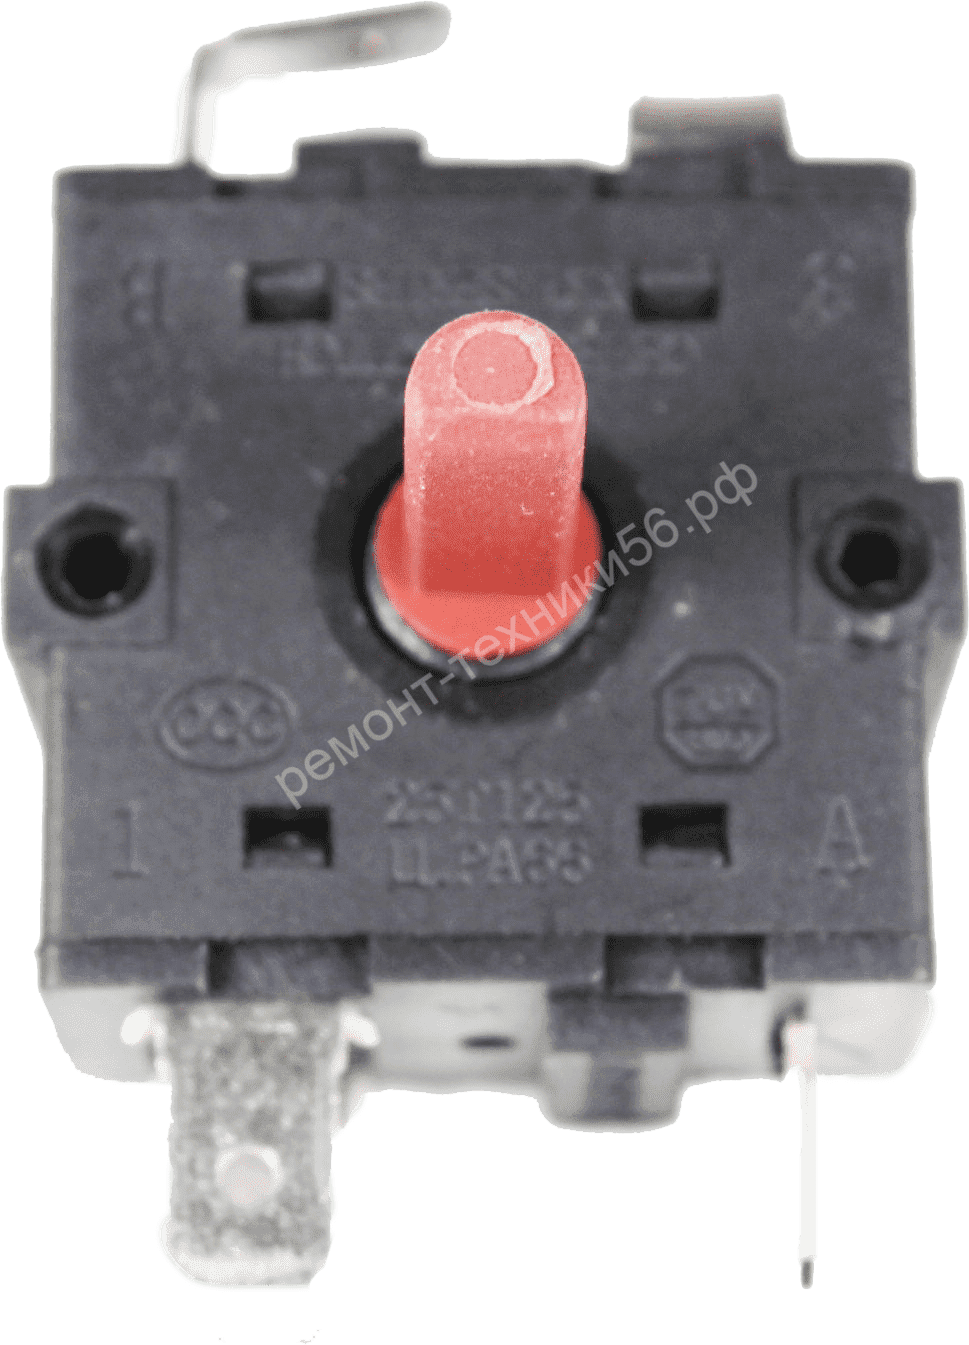 Переключатель Rotary Switch XK1-233,2-1 по лучшей цене фото3